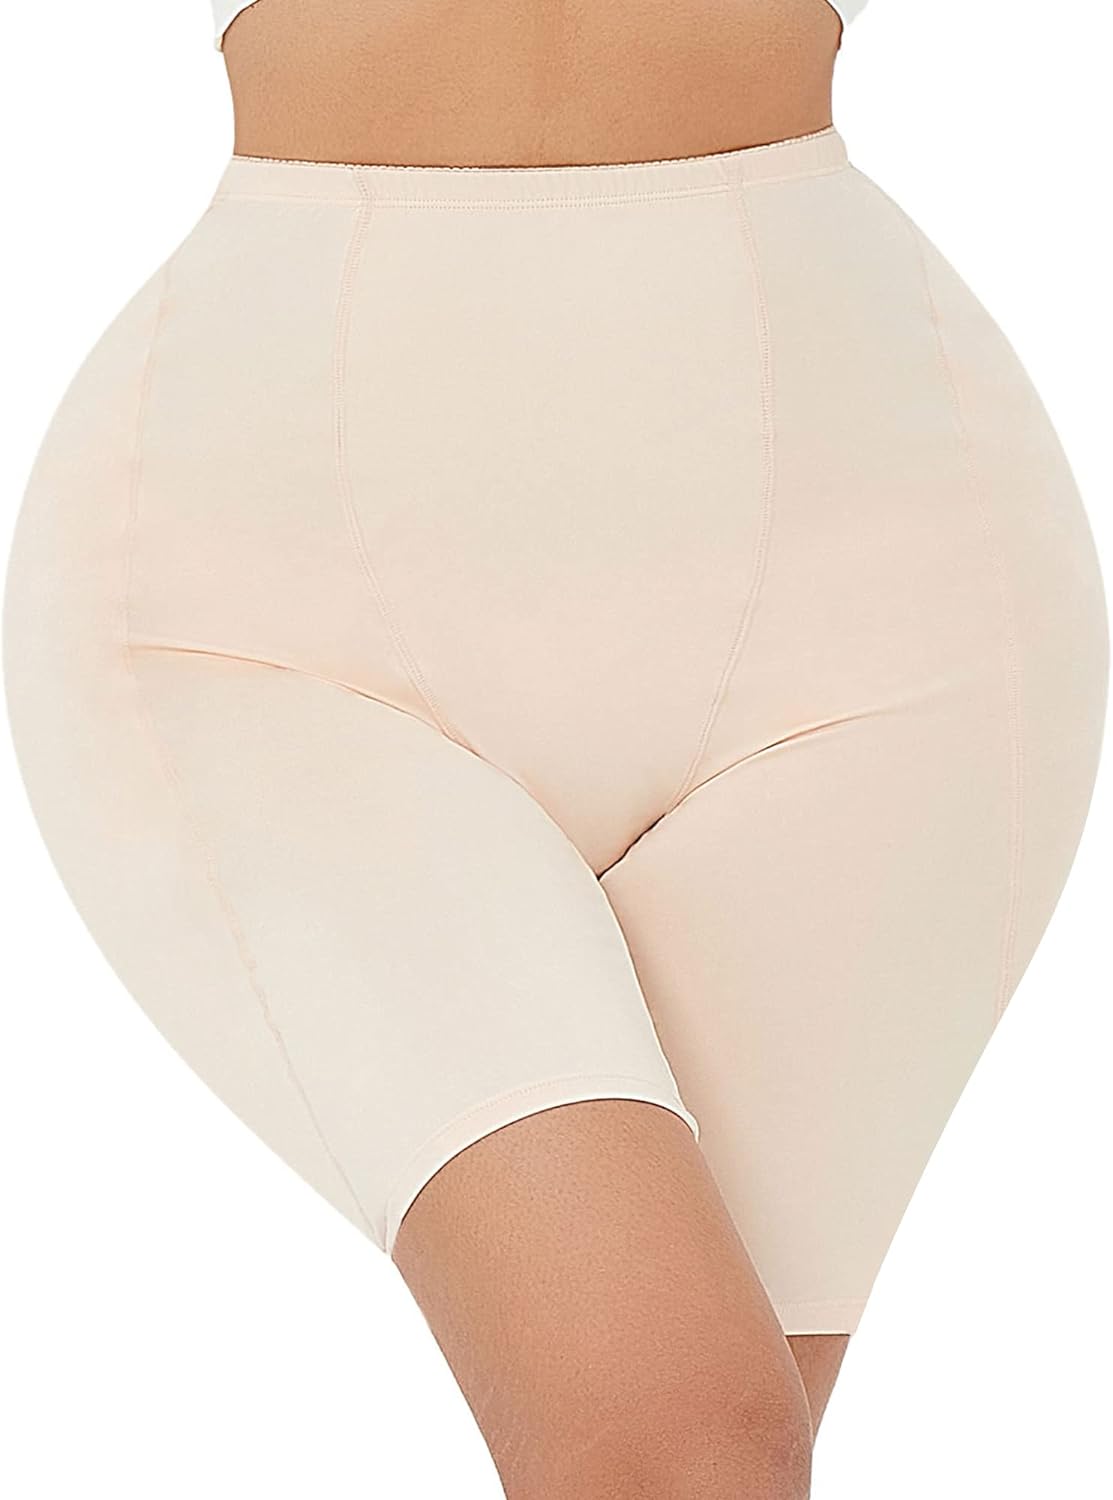 New Women Crossdressers Hip Up Padded Panties Enhancing Bum Butt Shapewear 